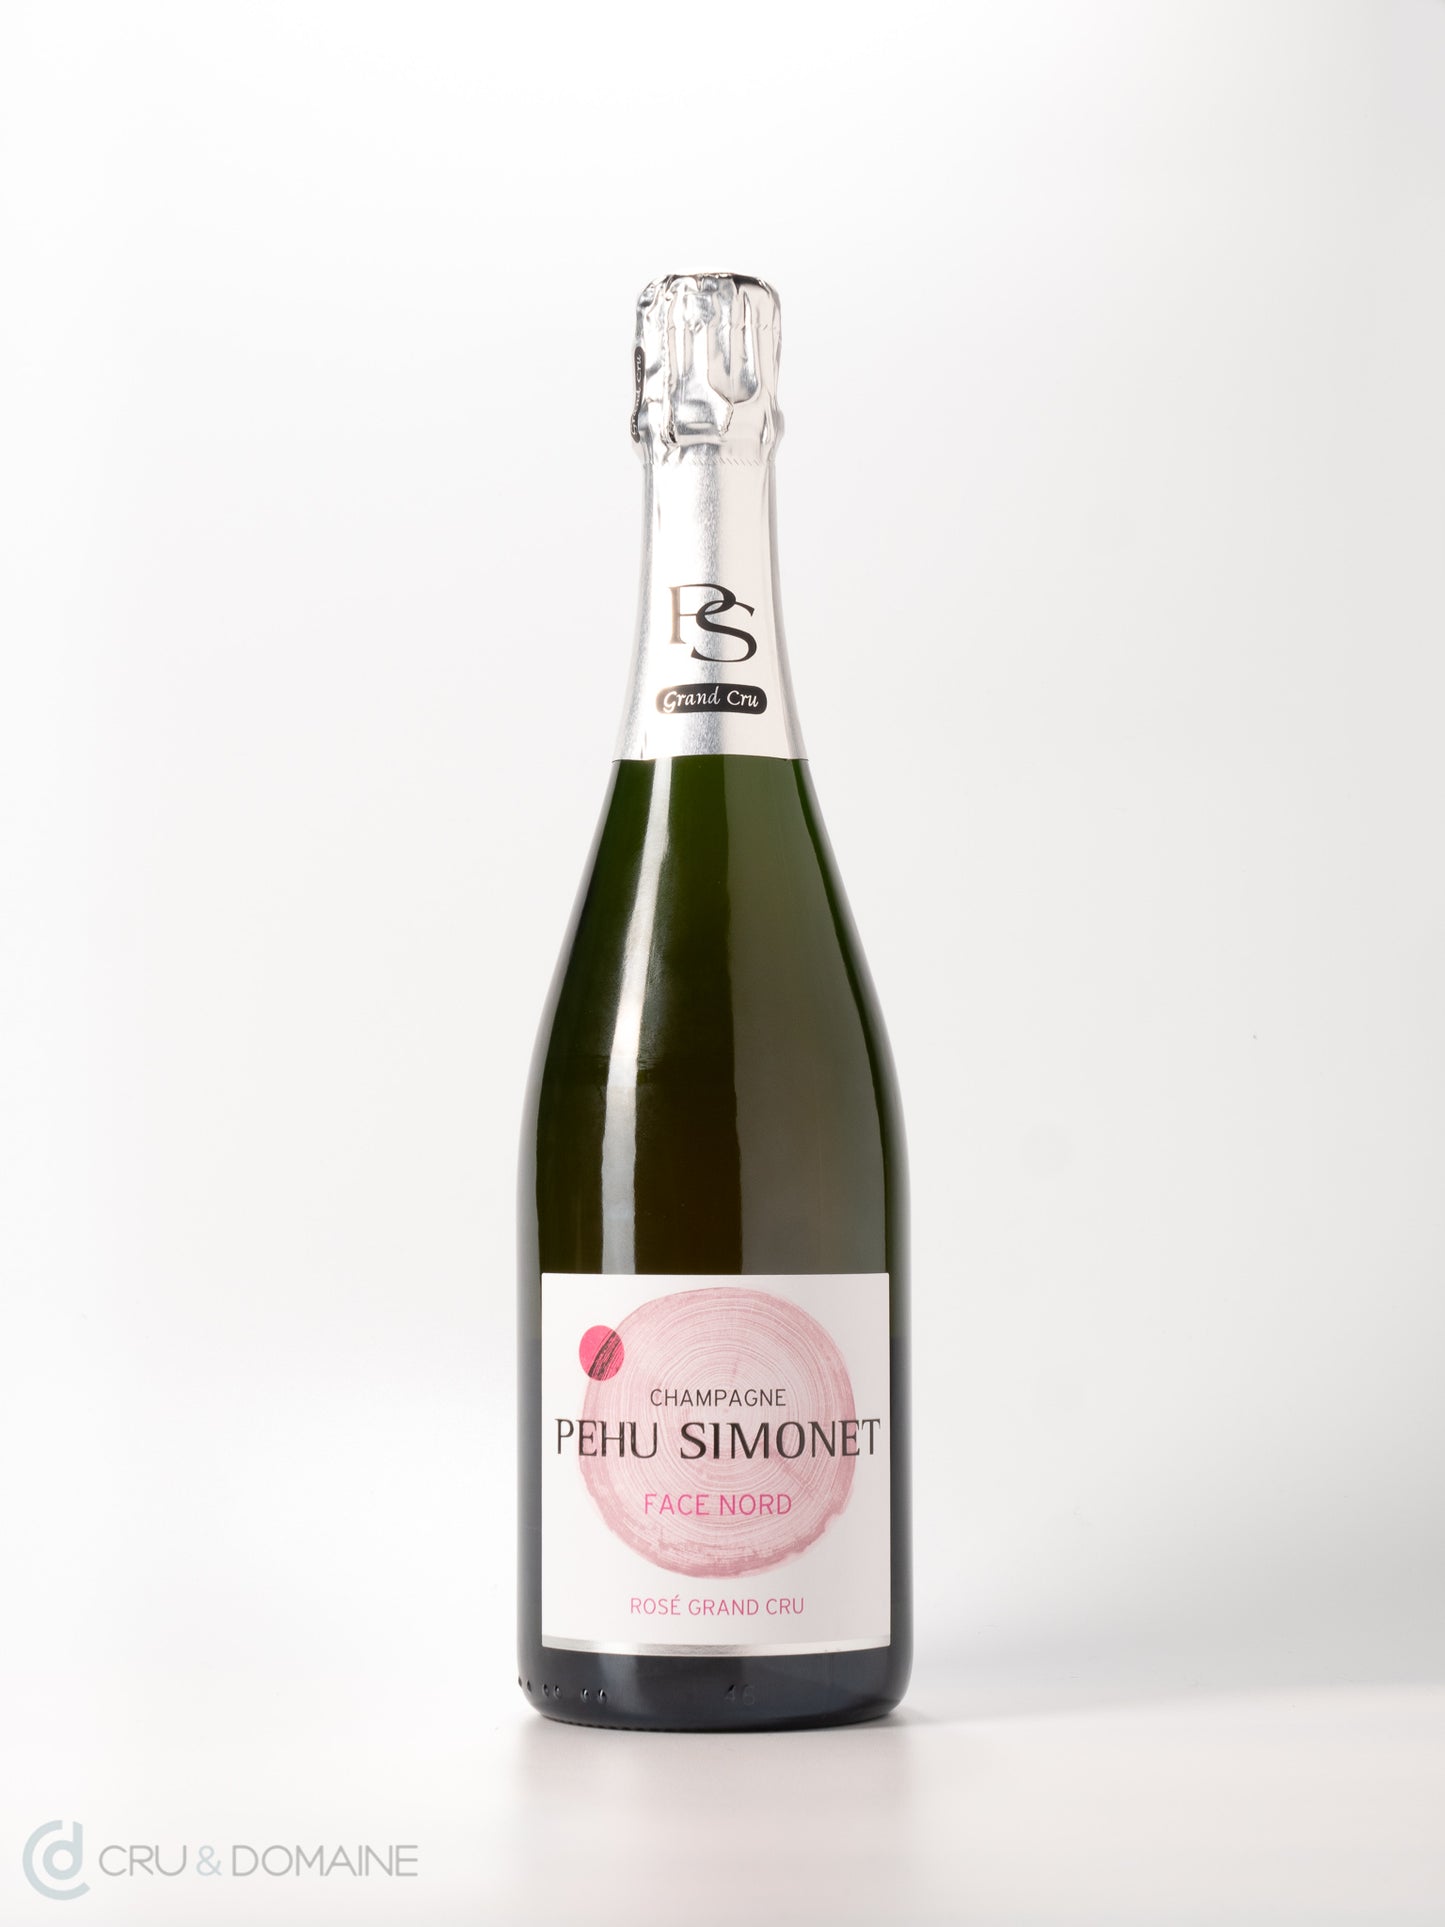 NV Pehu-Simonet, 'Face Nord', Rosé Grand Cru, Champagne, France